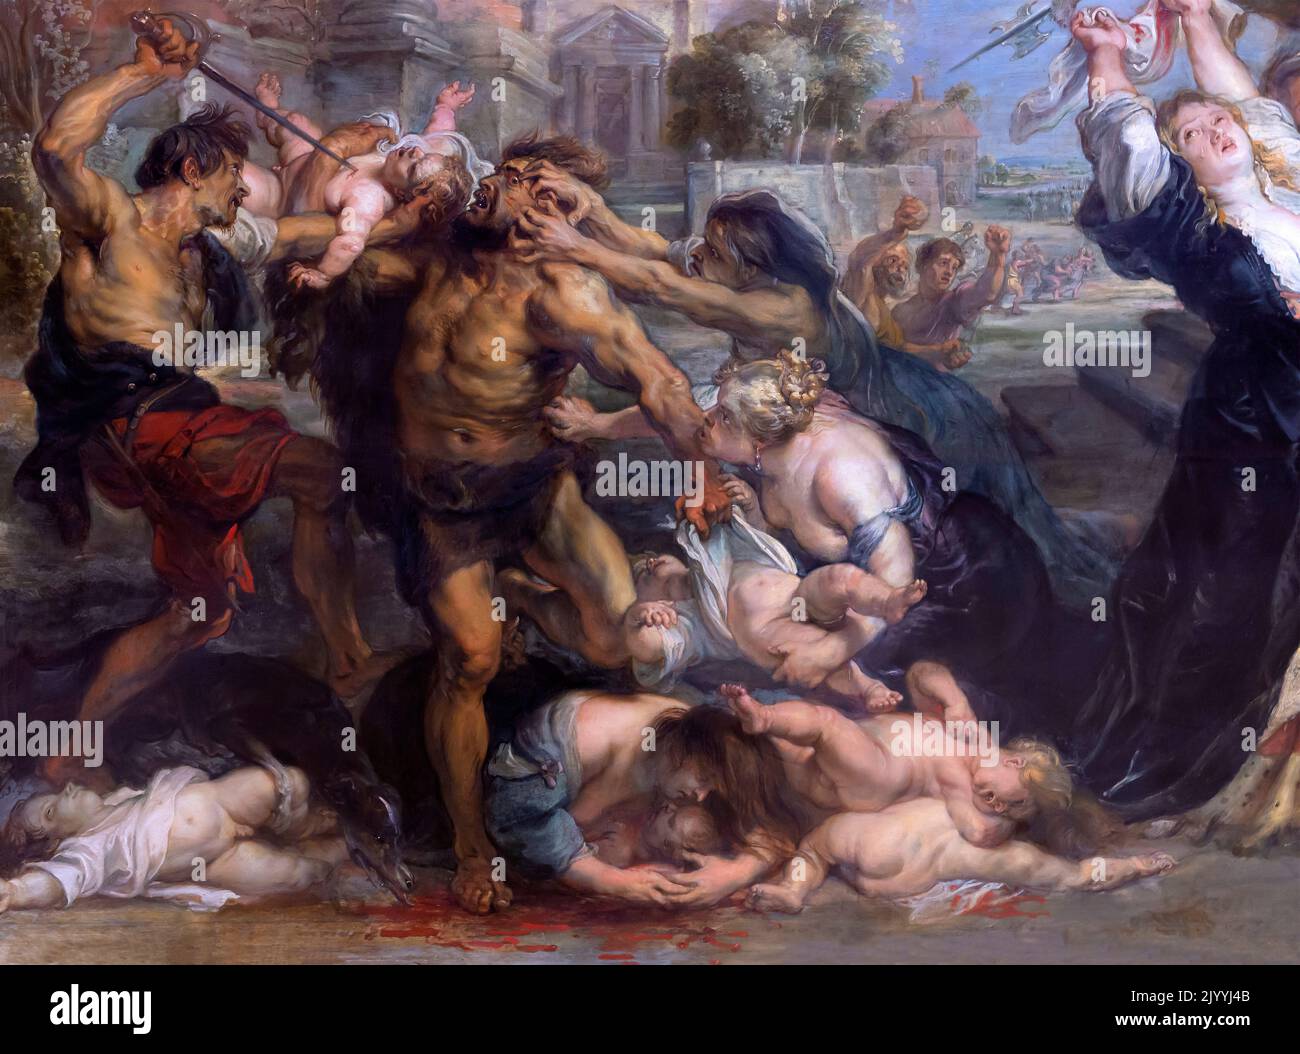 Il massacro degli Innocenti, Peter Paul Rubens, dettaglio, 1638, Alte Pinakothek, Monaco di Baviera, Germania, Europa Foto Stock